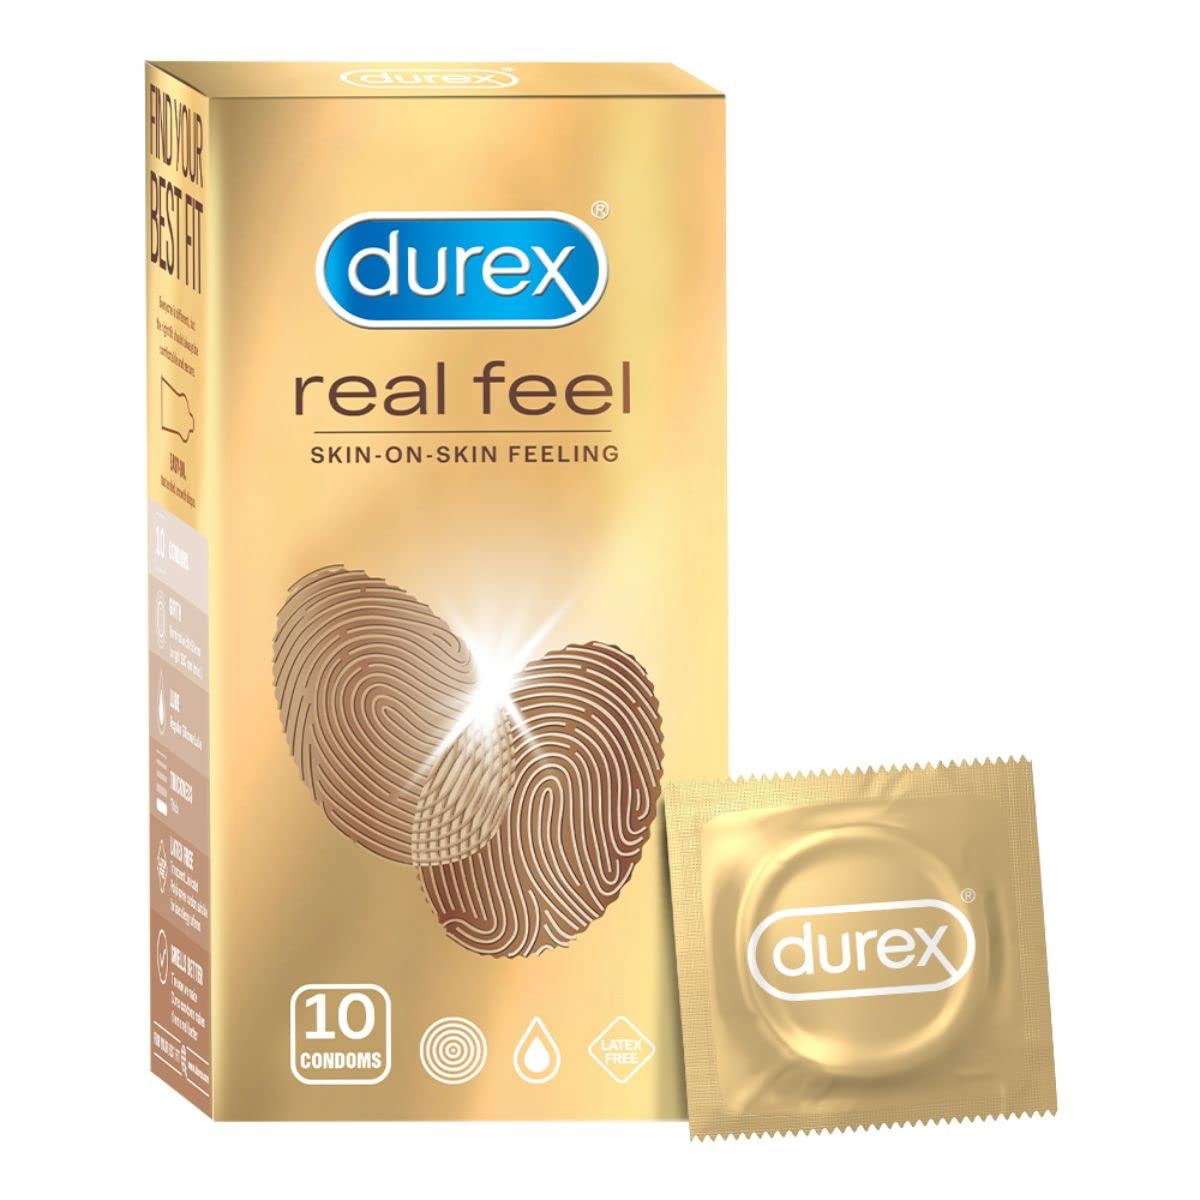 Durex Real feel